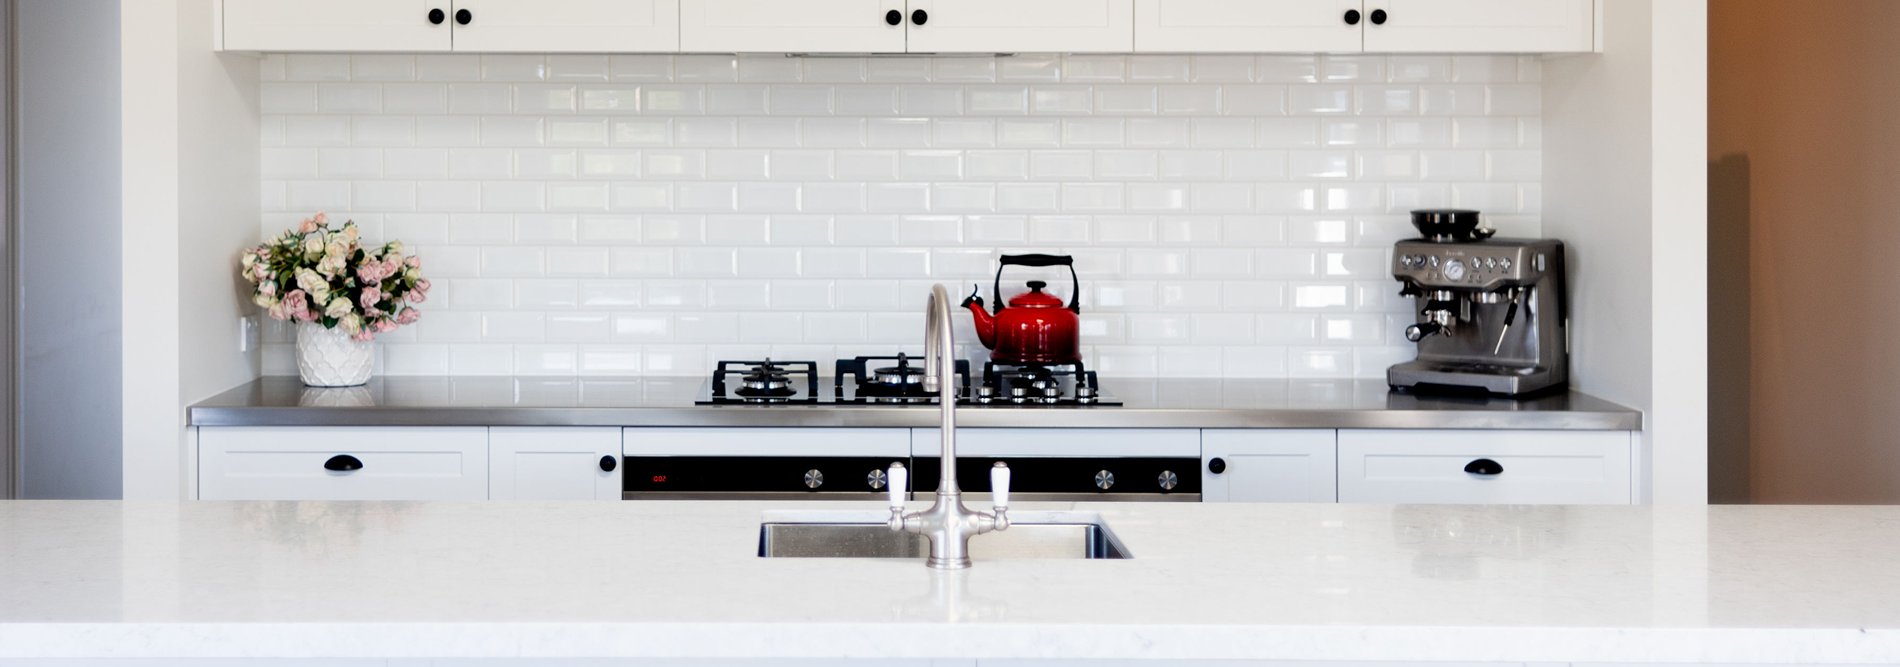 White kitchen design with kitchen appliances